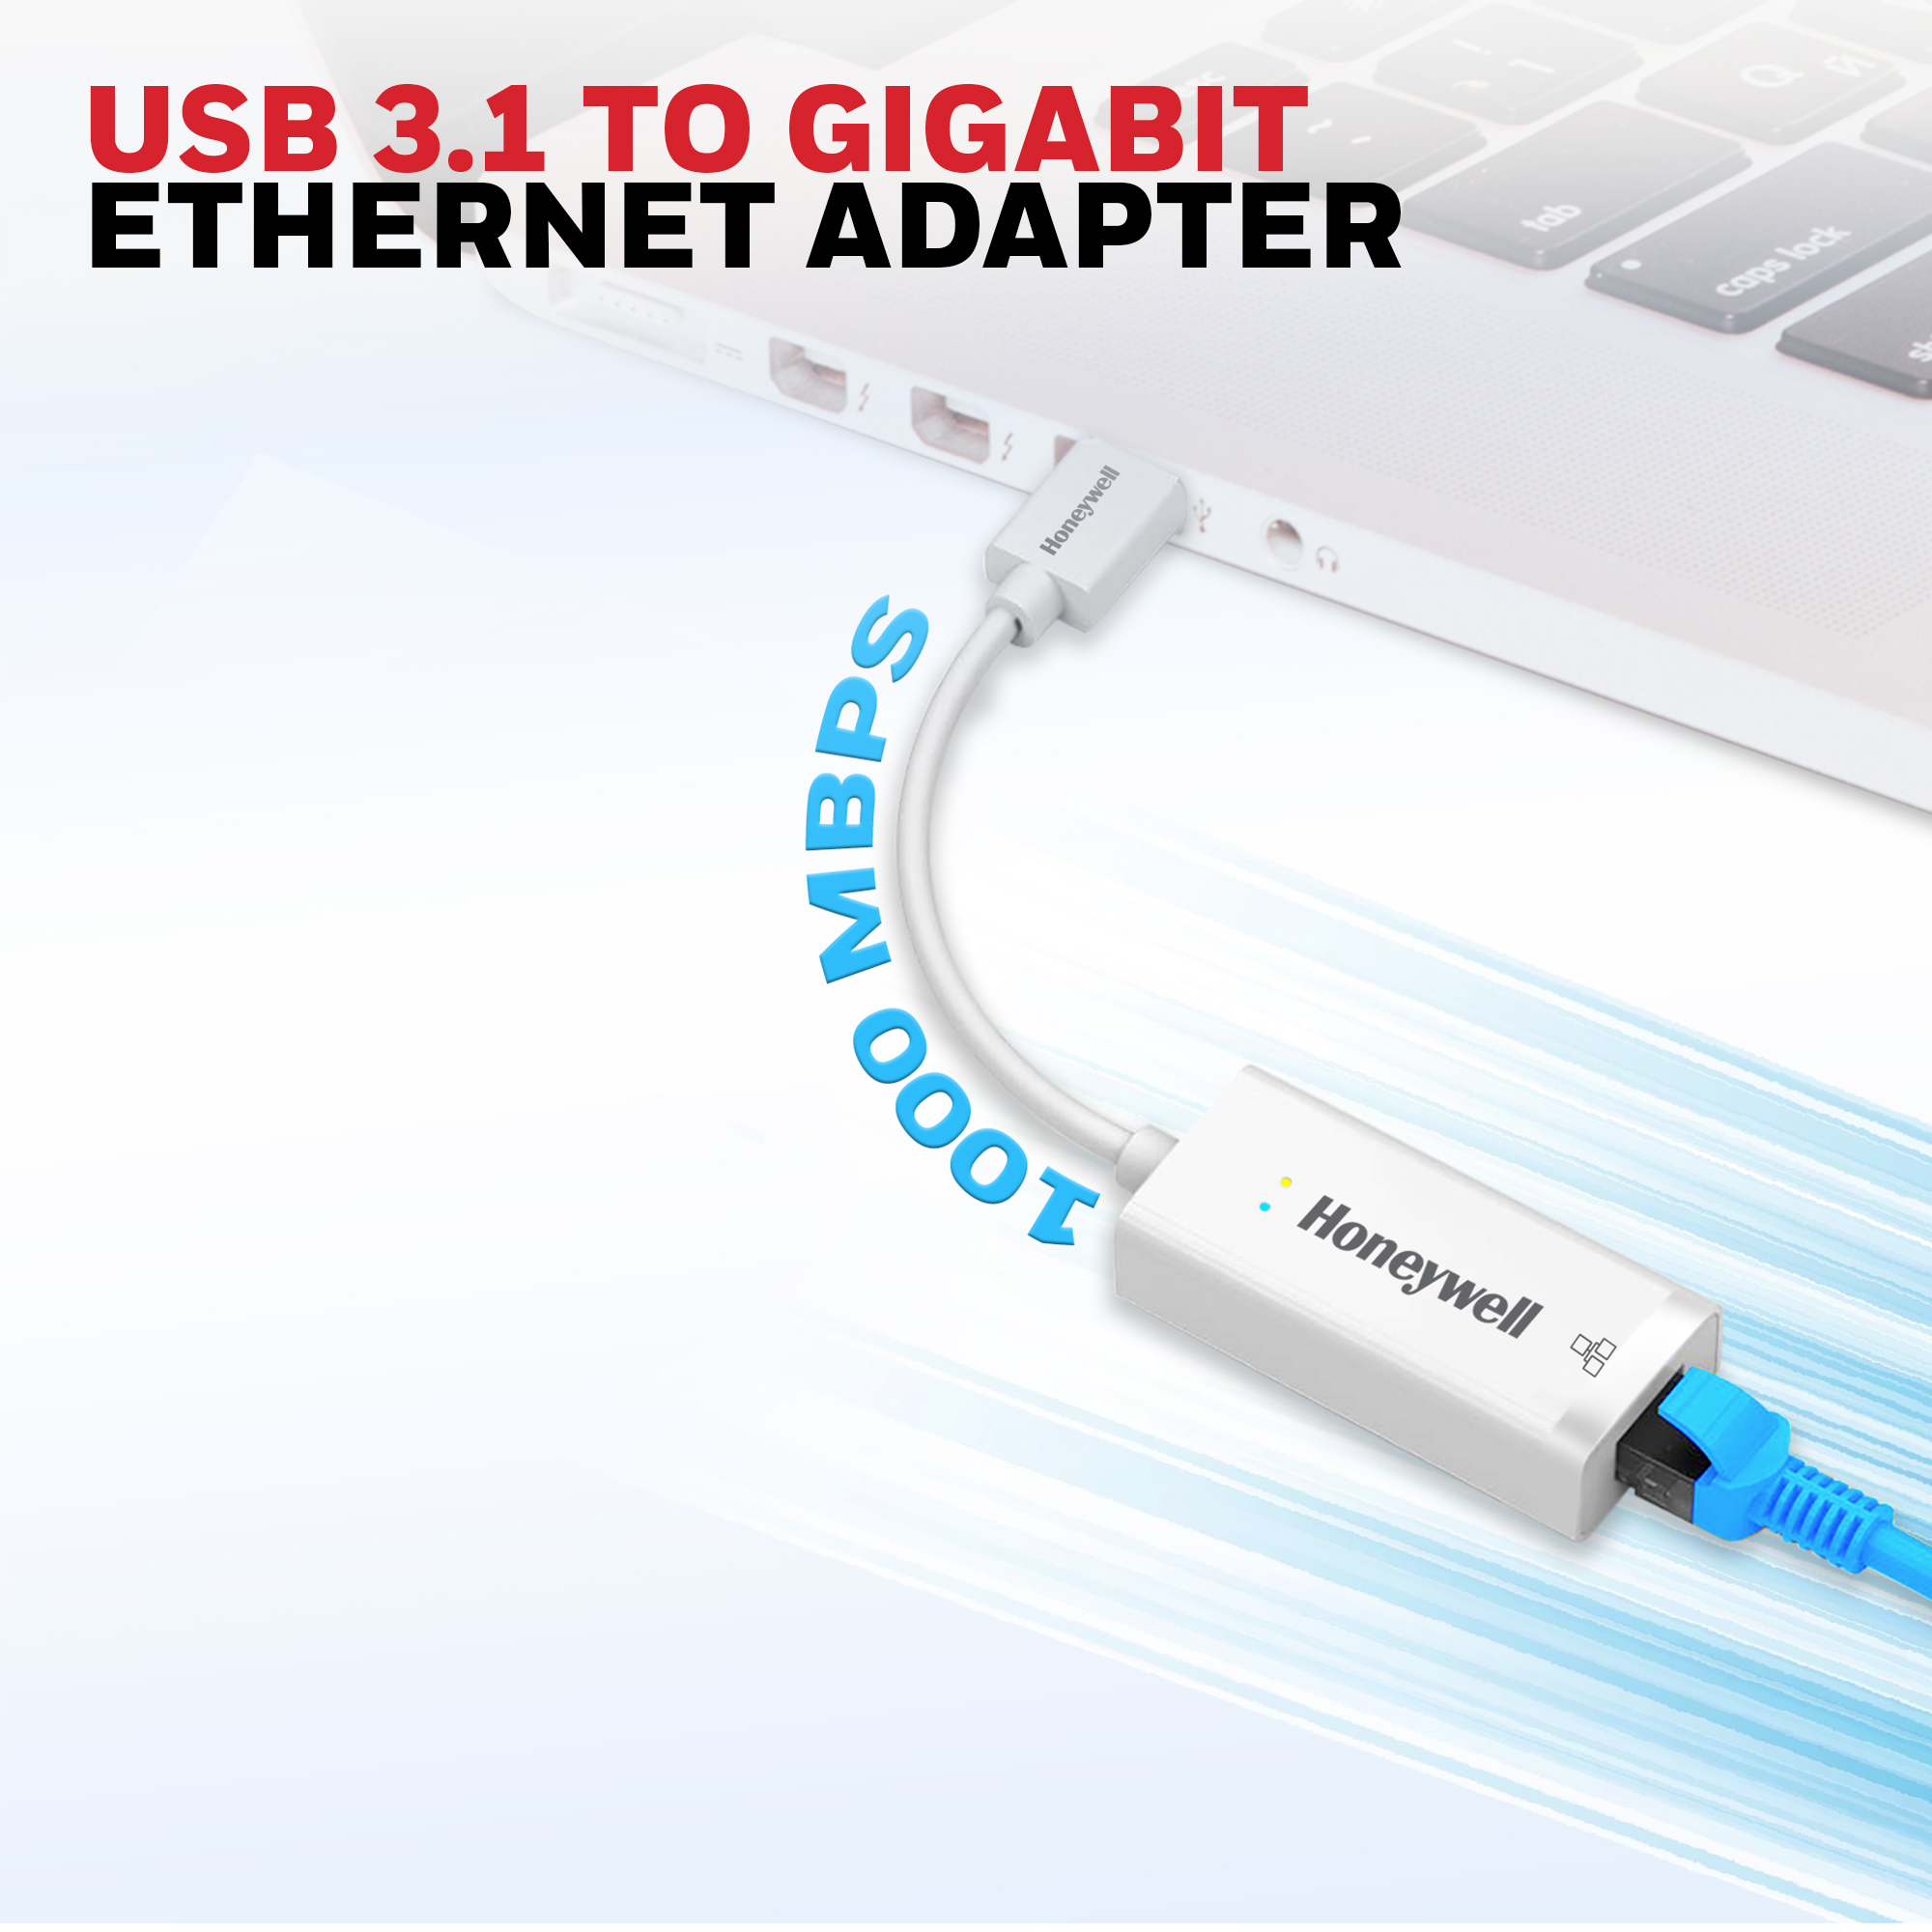 Honeywell High-Speed USB 3.1 to RJ45 Gigabit Ethernet Adapter, supports upto 10/100/1000 MBPS Bandwidth